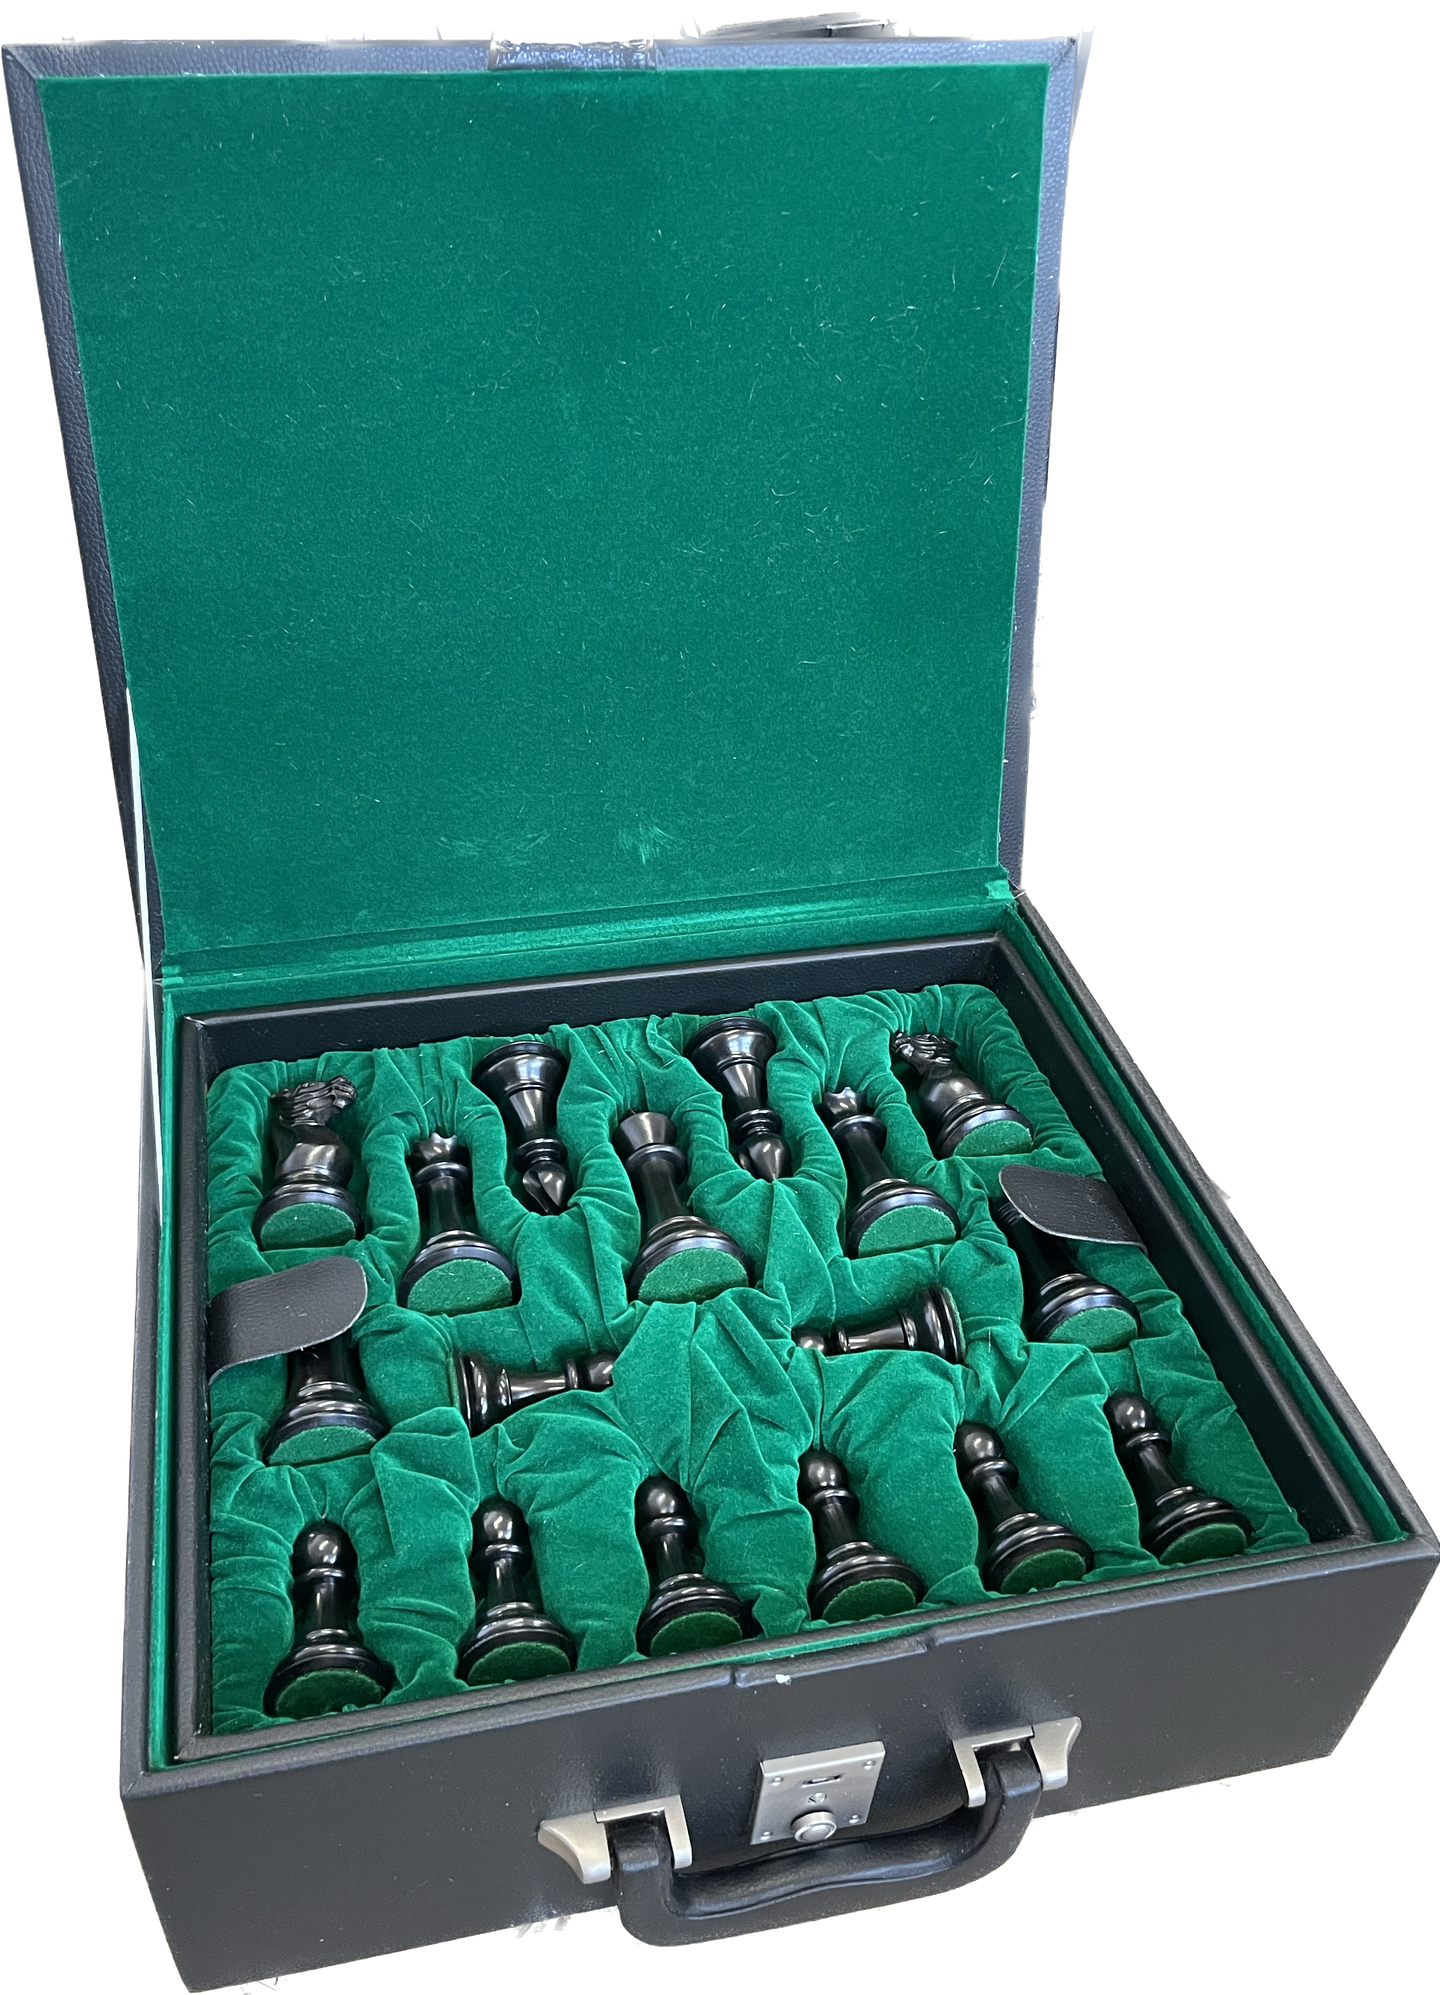 1849 Reproducir Staunton 4.4' Piezas de ajedrez de ébano Hecho a mano India